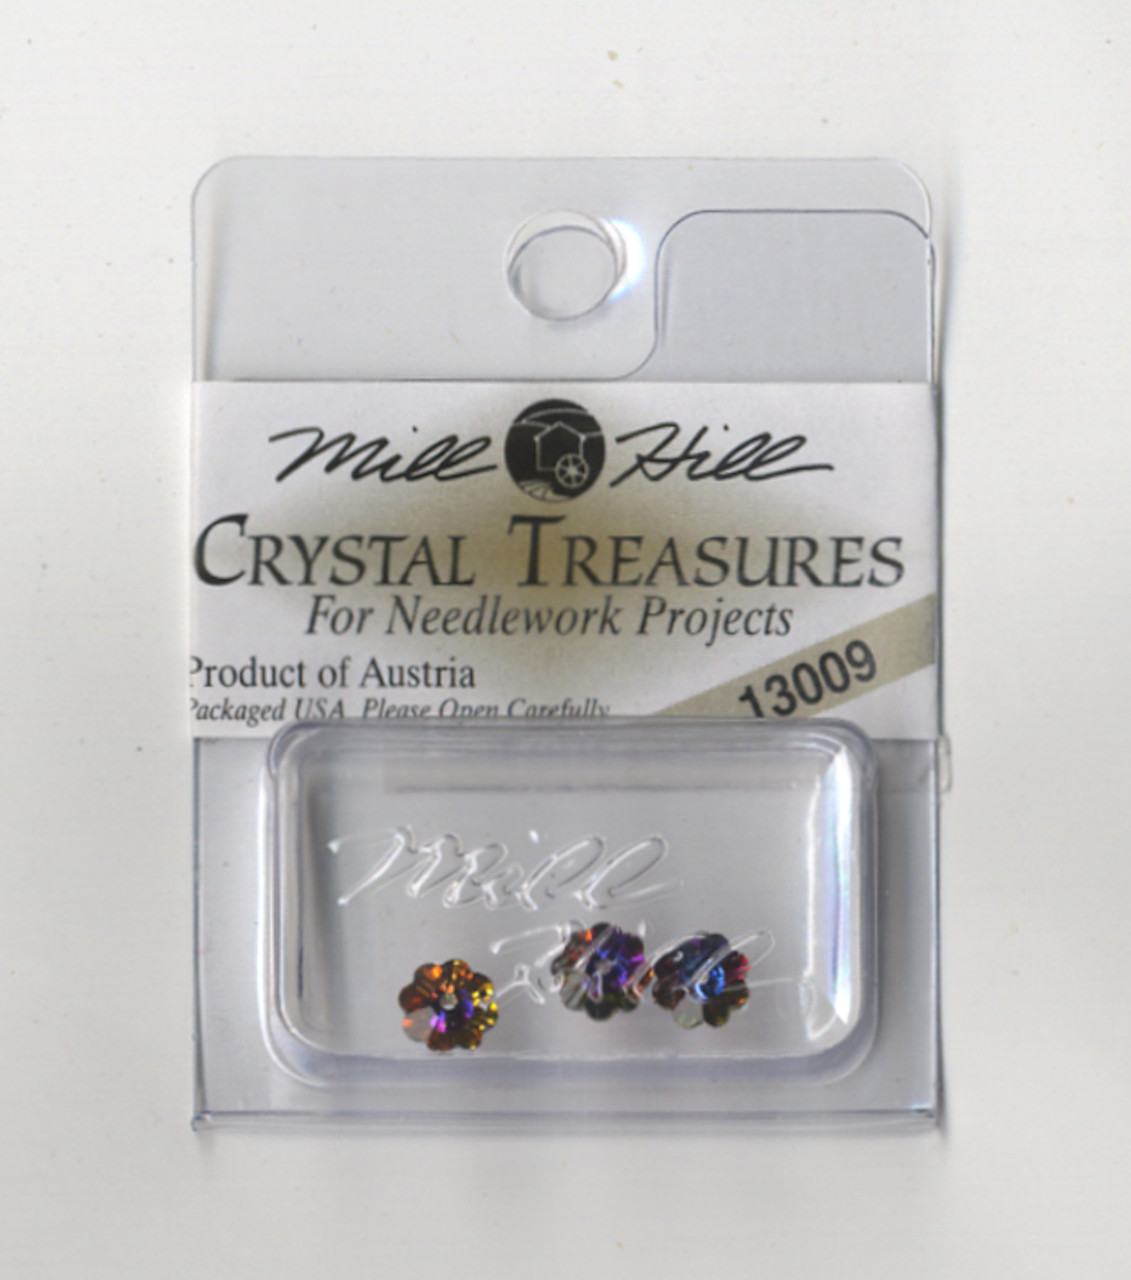 Mill Hill Crystal Treasures - Margarita Heliotrop #13009